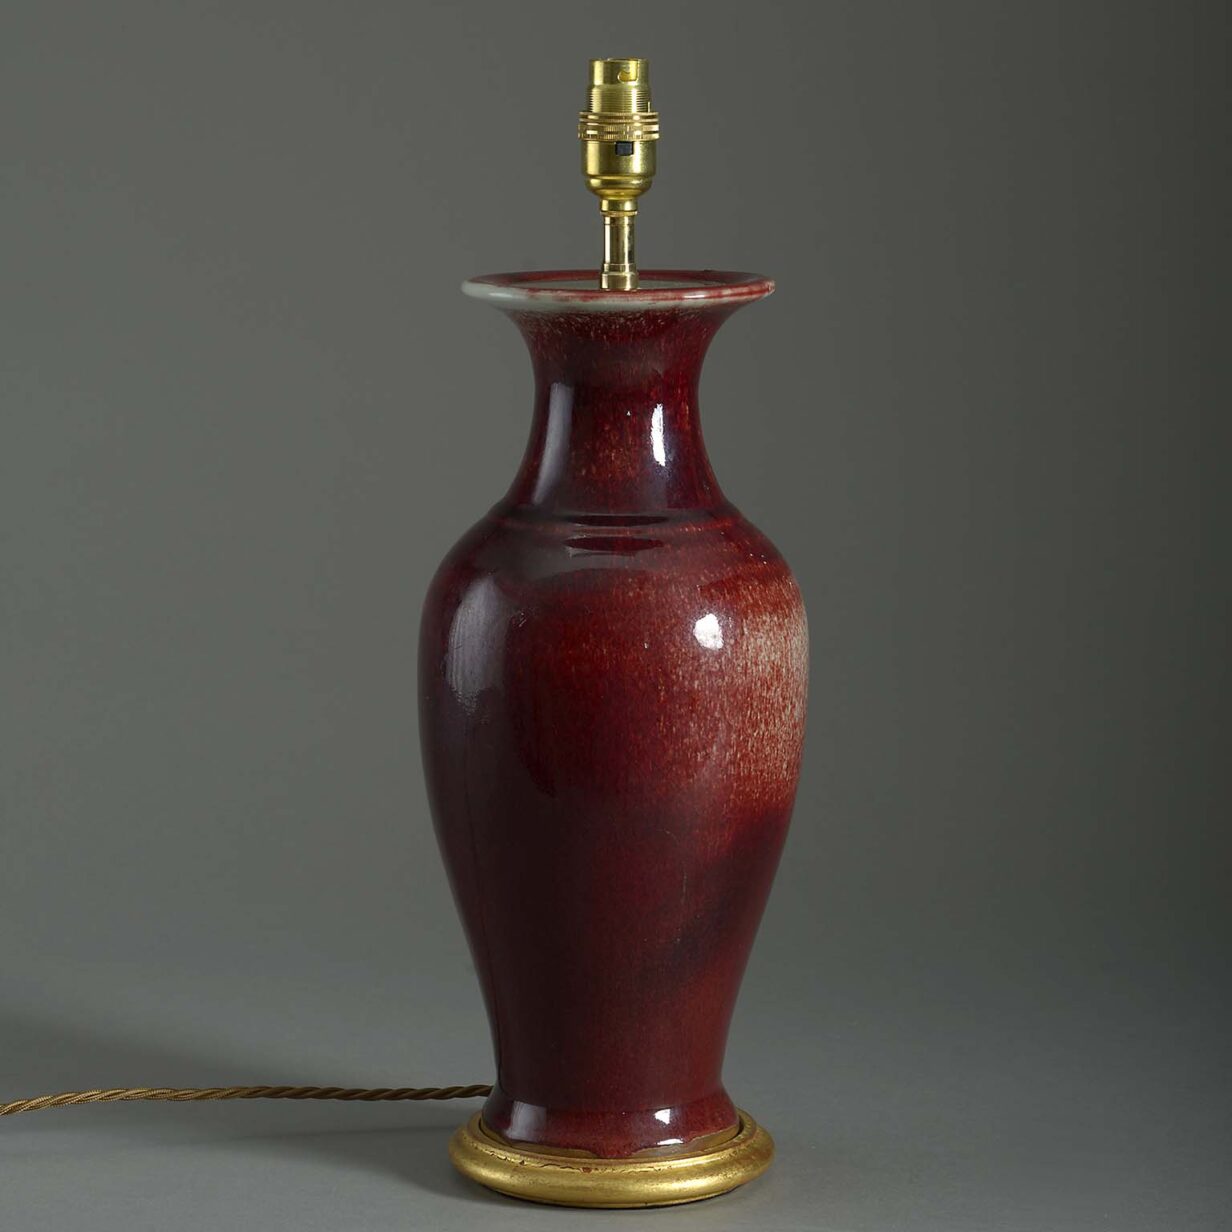 Sang de boeuf pottery vase lamp